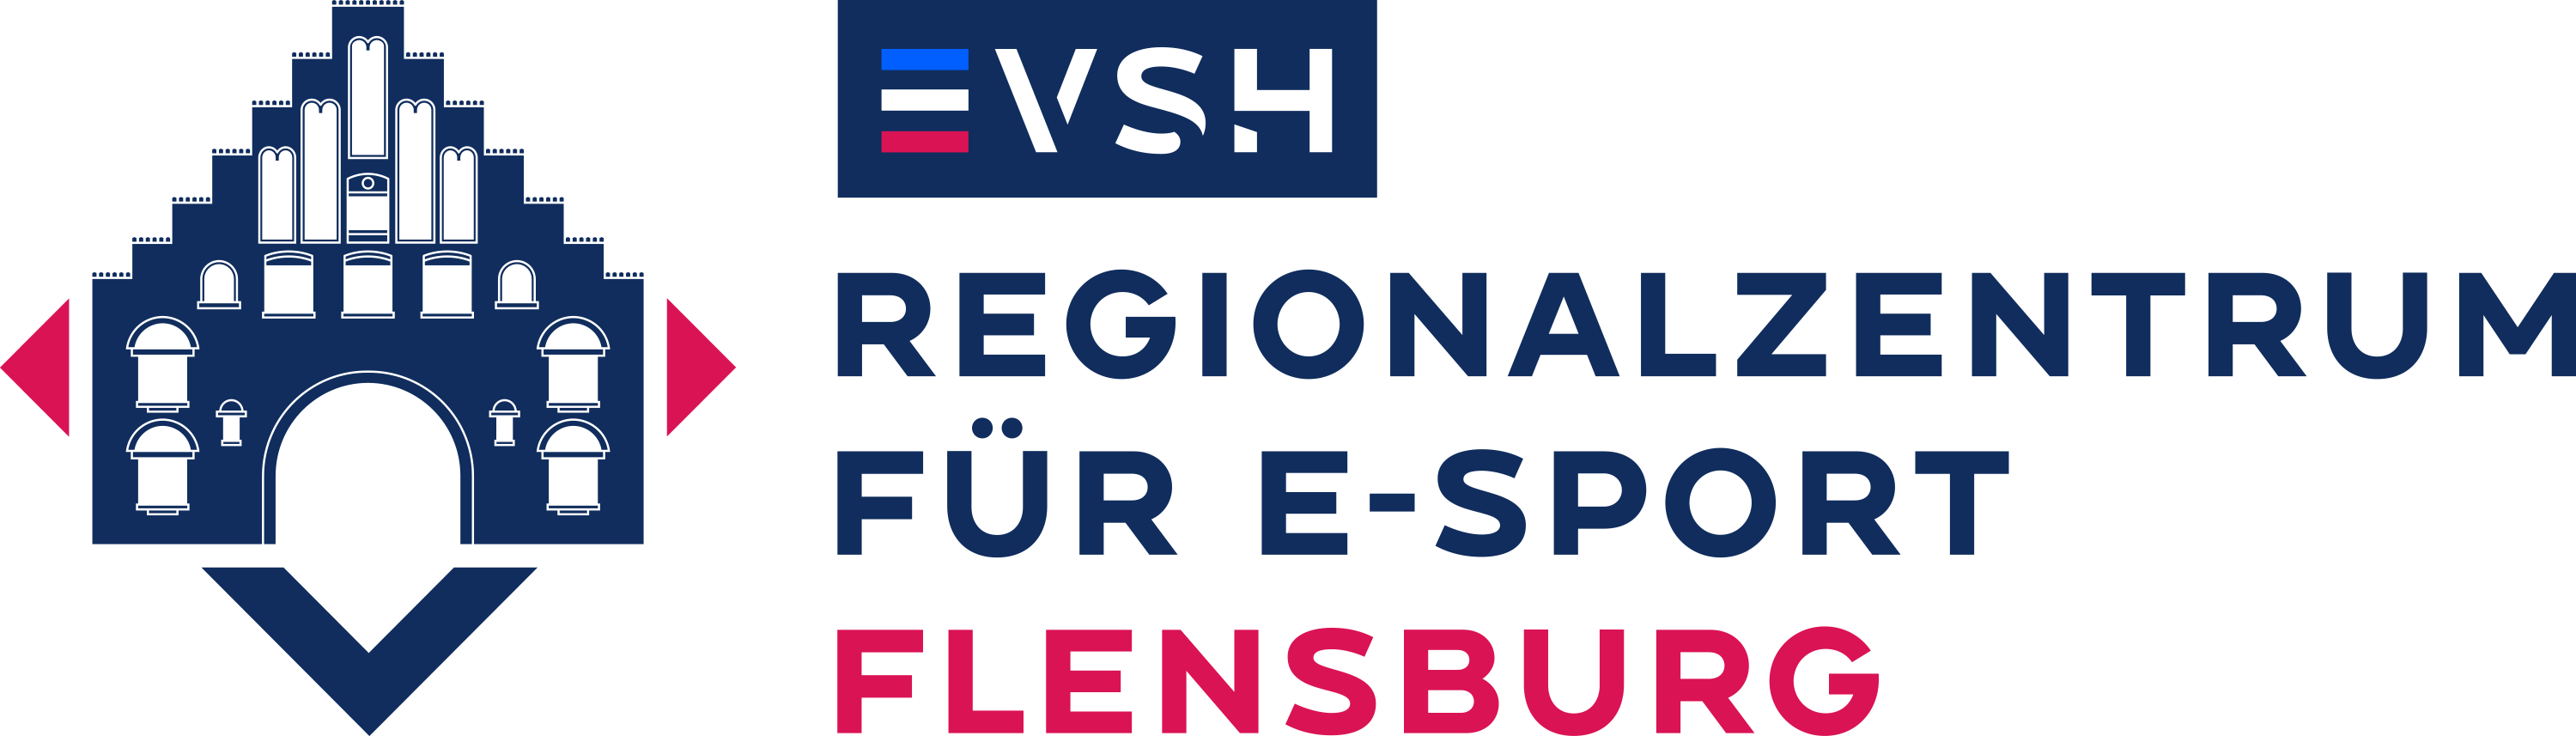 EVSH E-Sport Regionalzentrum Flensburg Logo